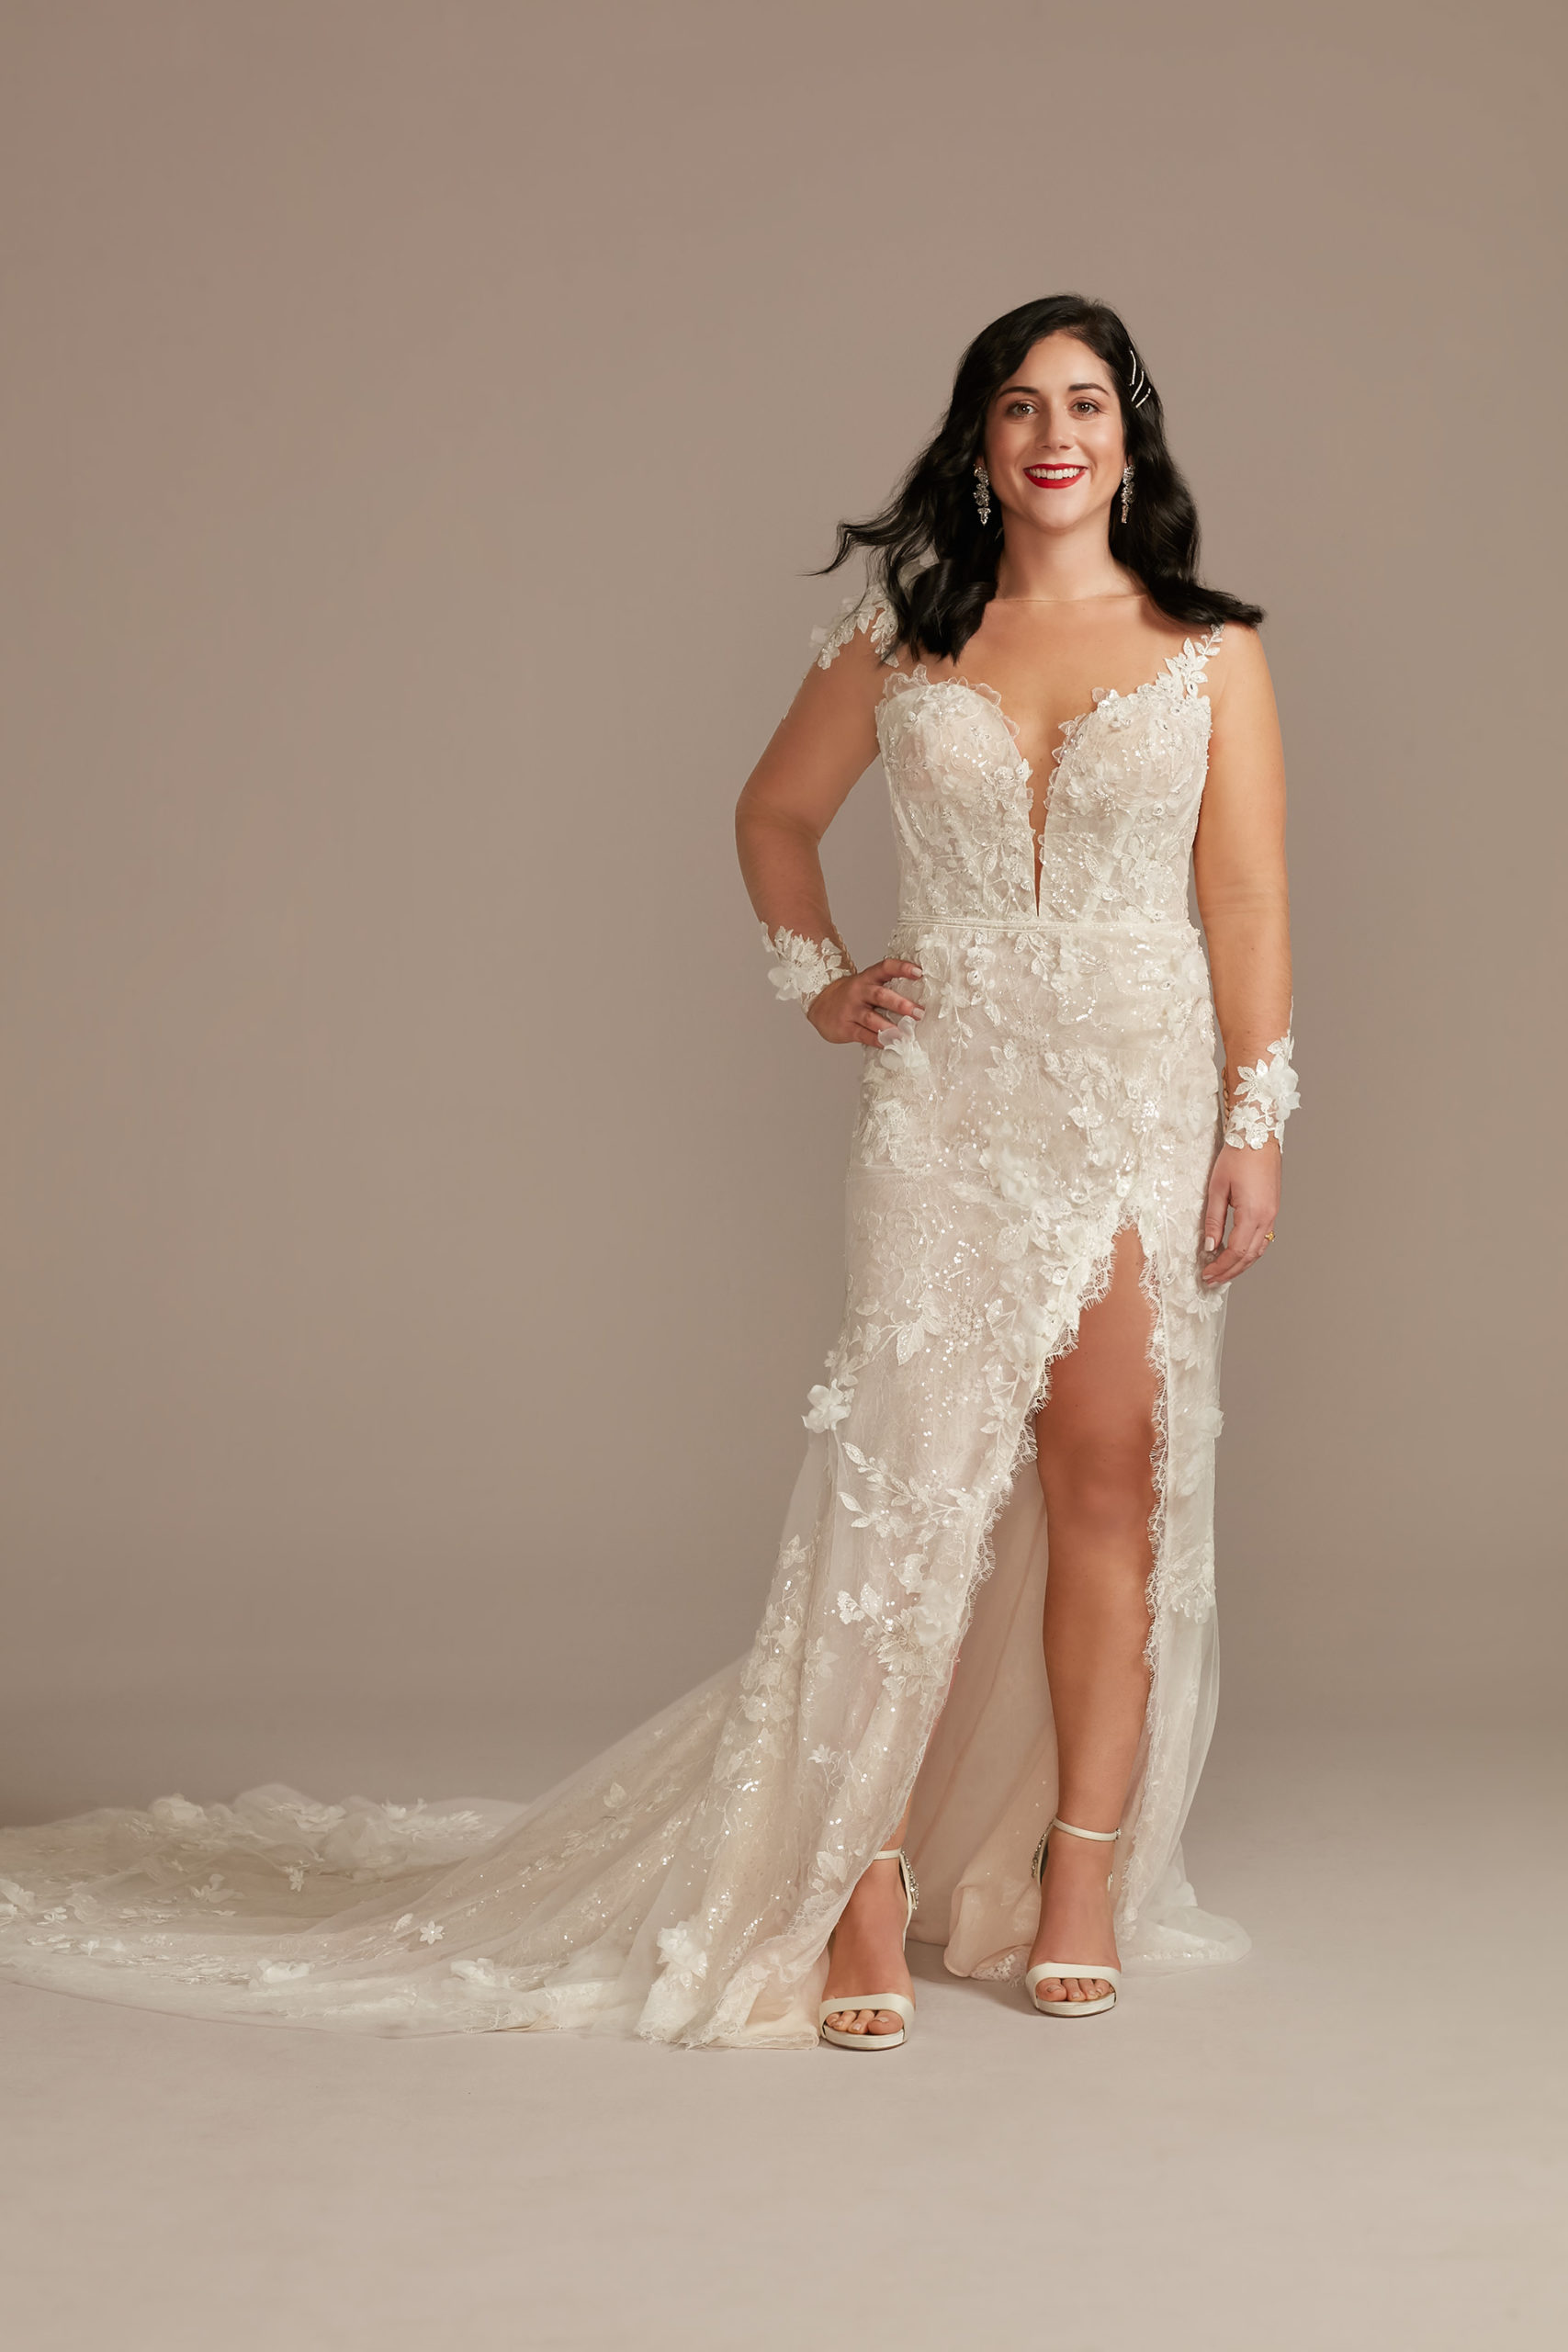 bride wearing ethereal 3D Floral Applique Wedding Dress with High Slit